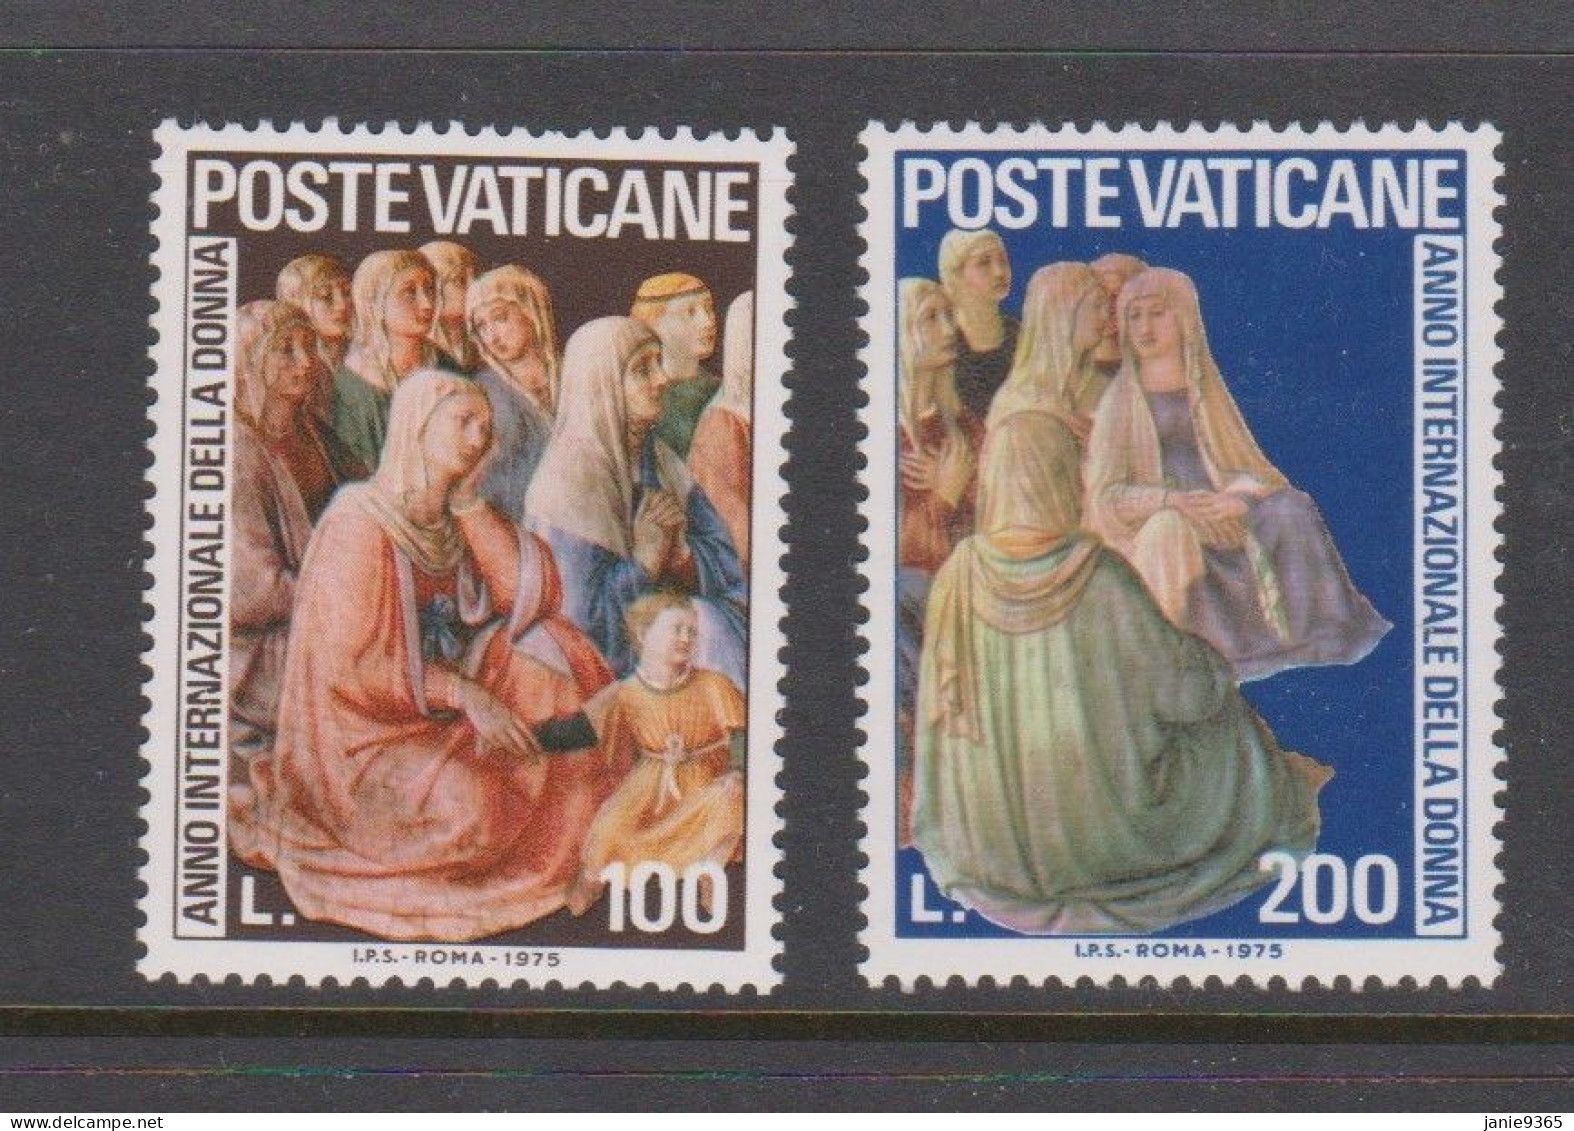 Vatican City S 604-605 1975 International Women Day.mint Never Hinged - Ungebraucht